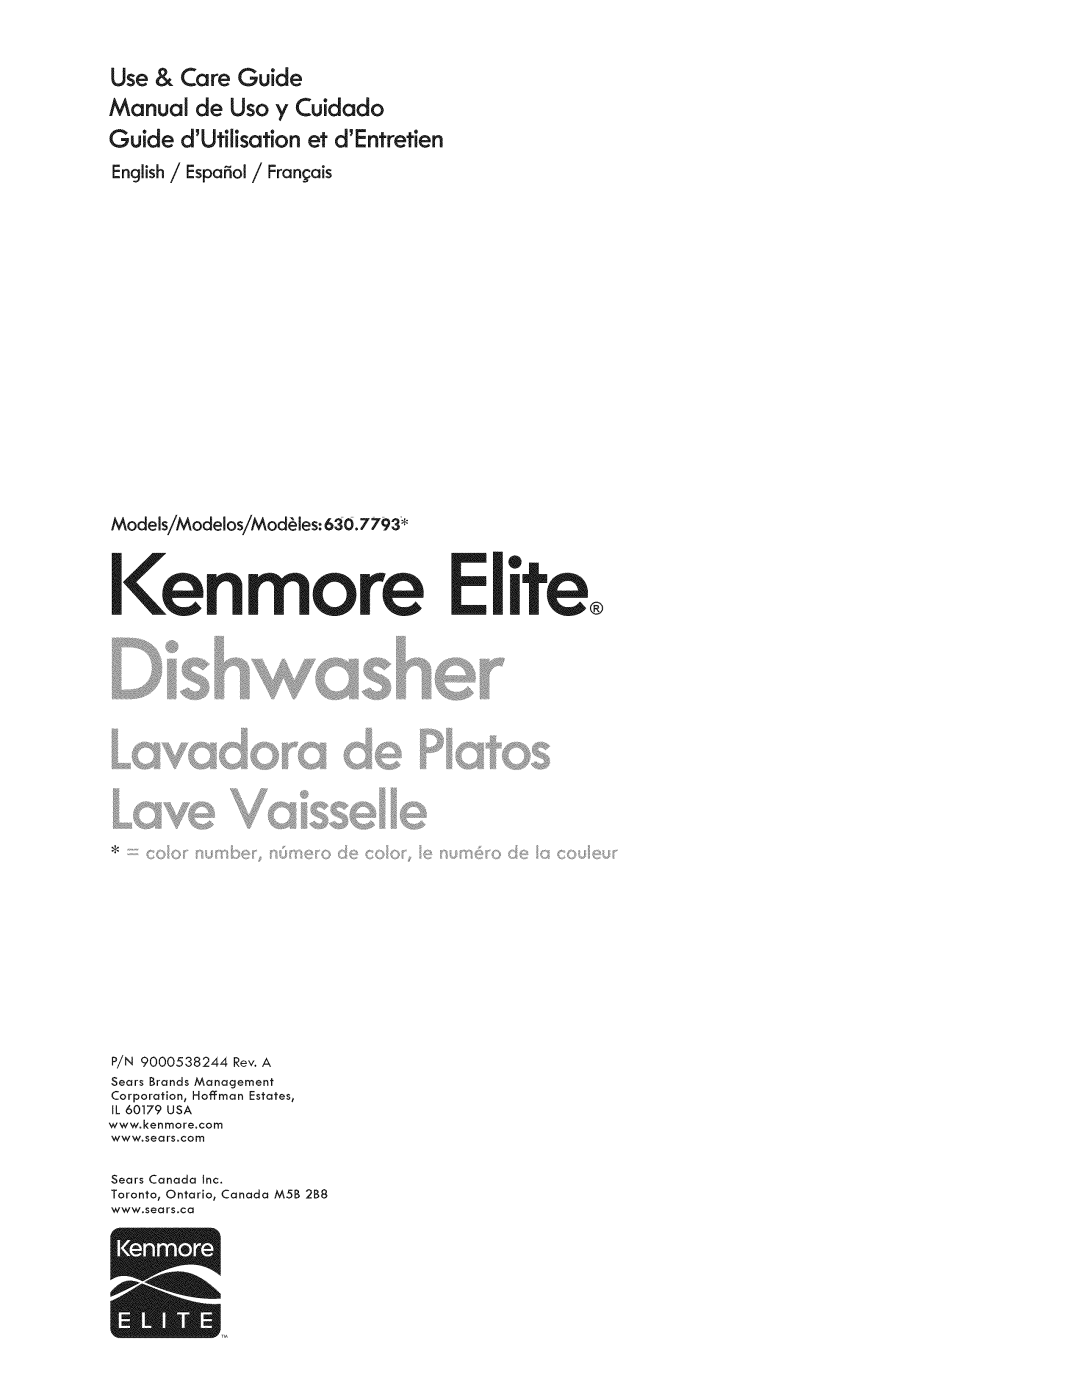 Kenmore manual English / Español / Français Models/Modelos/Modèles630.7793, Kenmore Elite, Dishwasher 